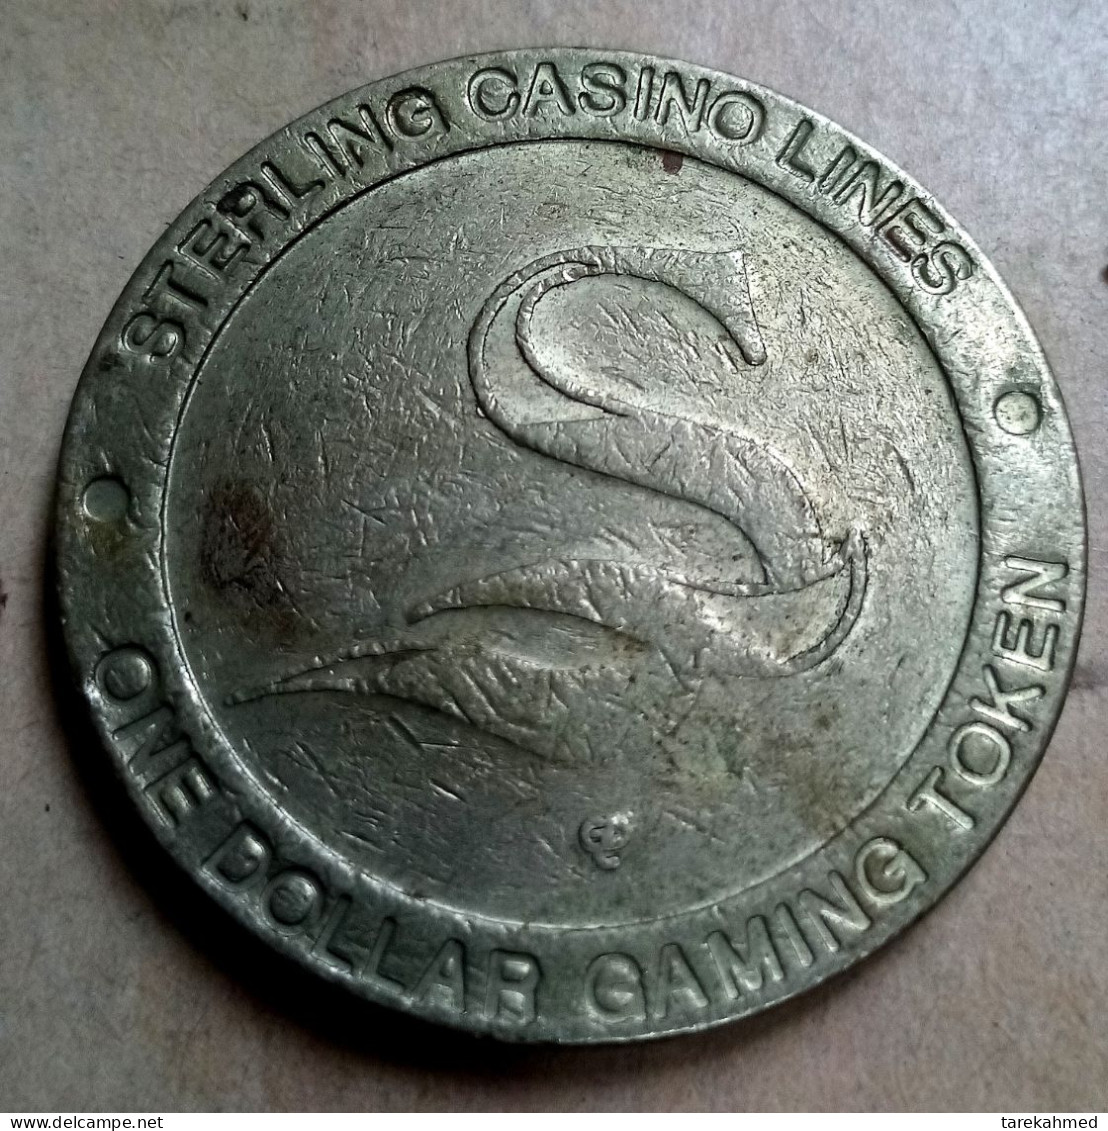 STERLING CASINO LINES ONE DOLLAR GAMING TOKEN VINTAGE ، Tokbag - Casino